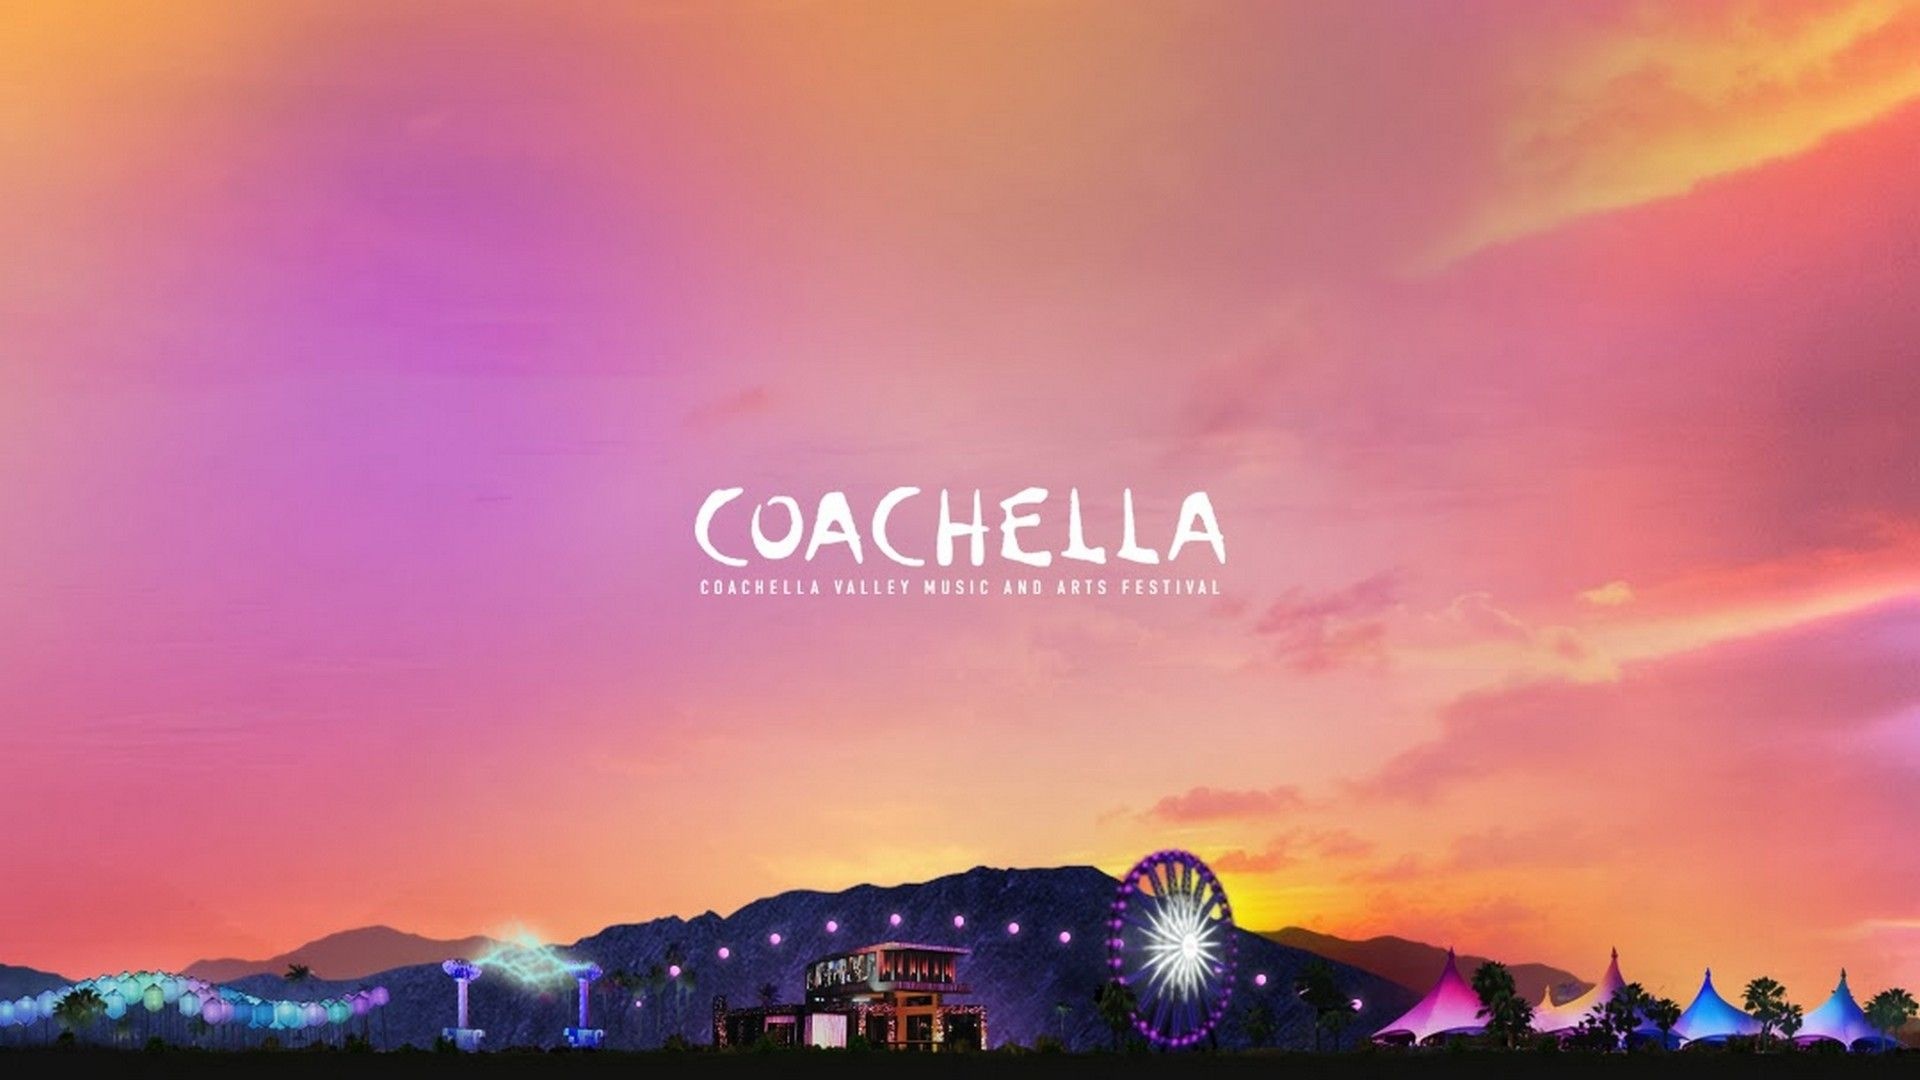 Coachella wallpapers, HD quality, 2019 memories, Eminem's iconic performance, 1920x1080 Full HD Desktop